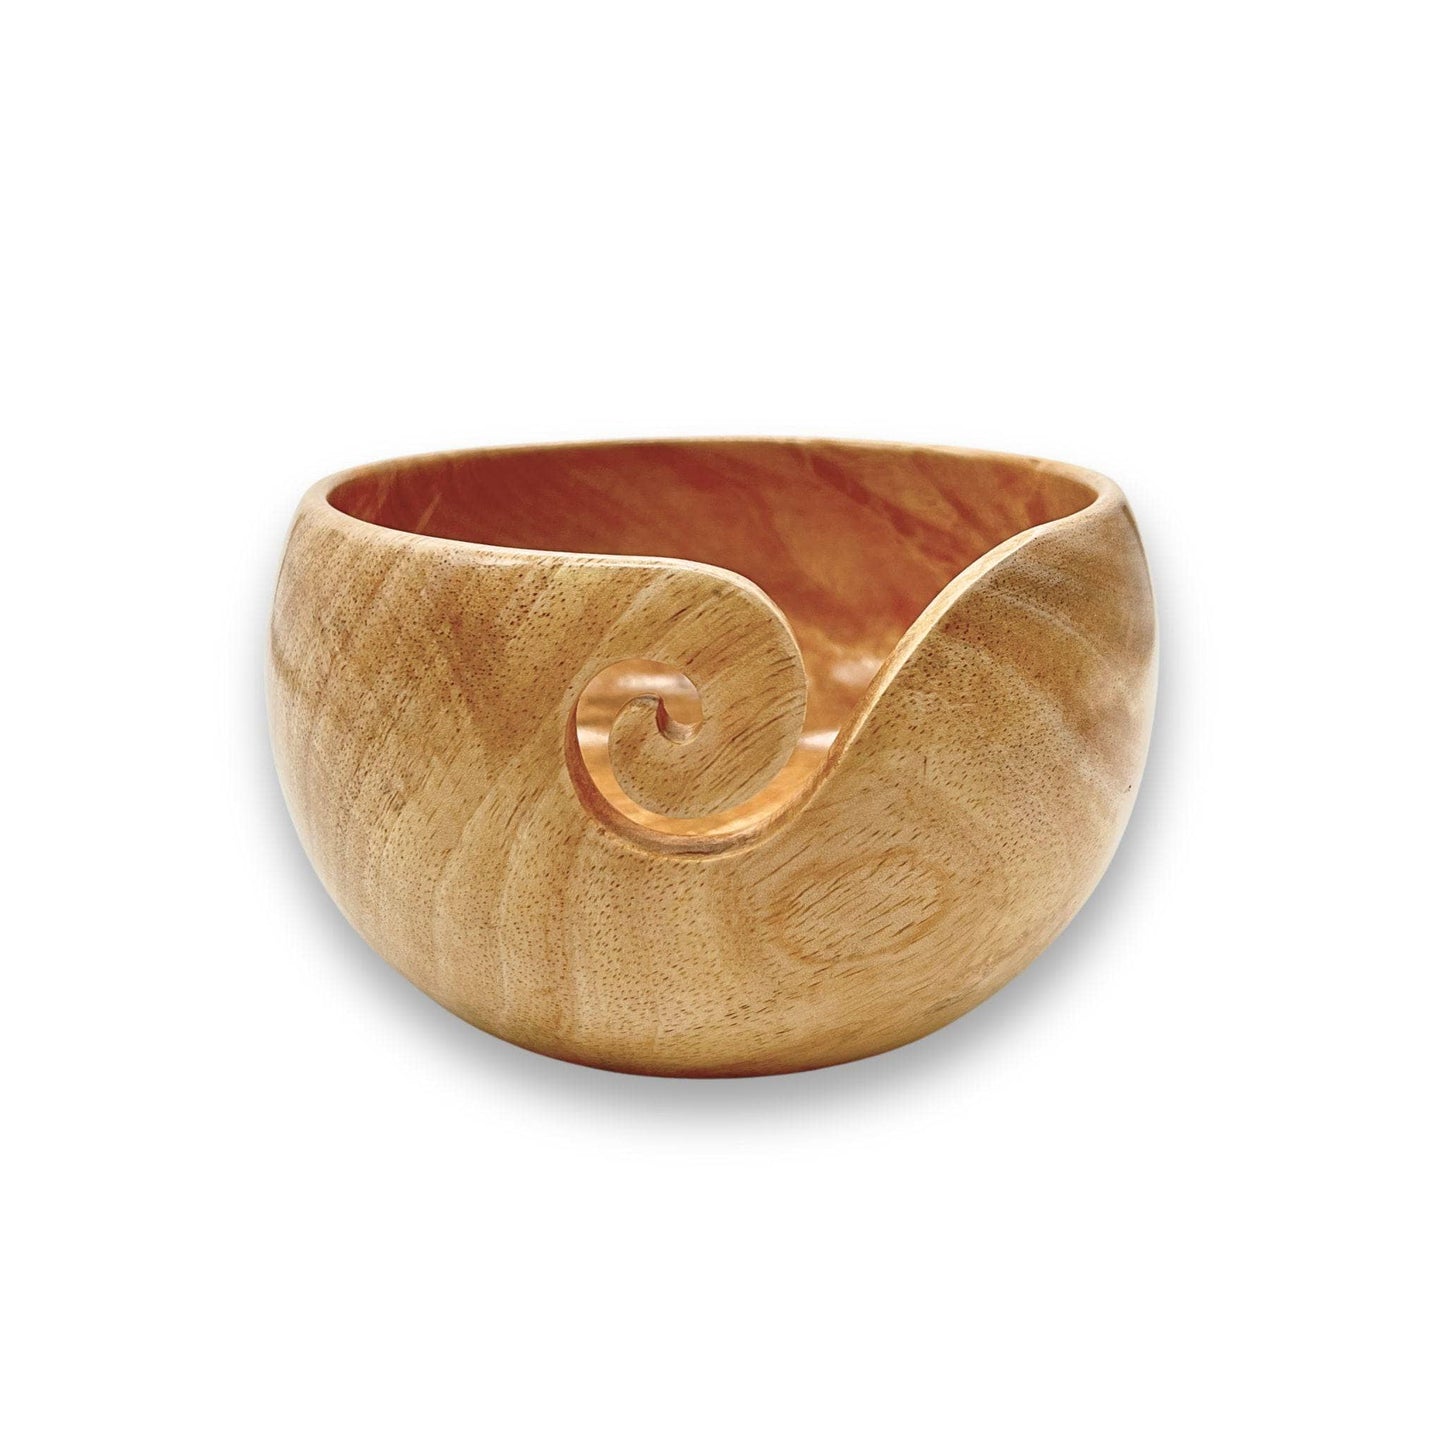 Natural light wood yarn bowl that has a natural wood grain color